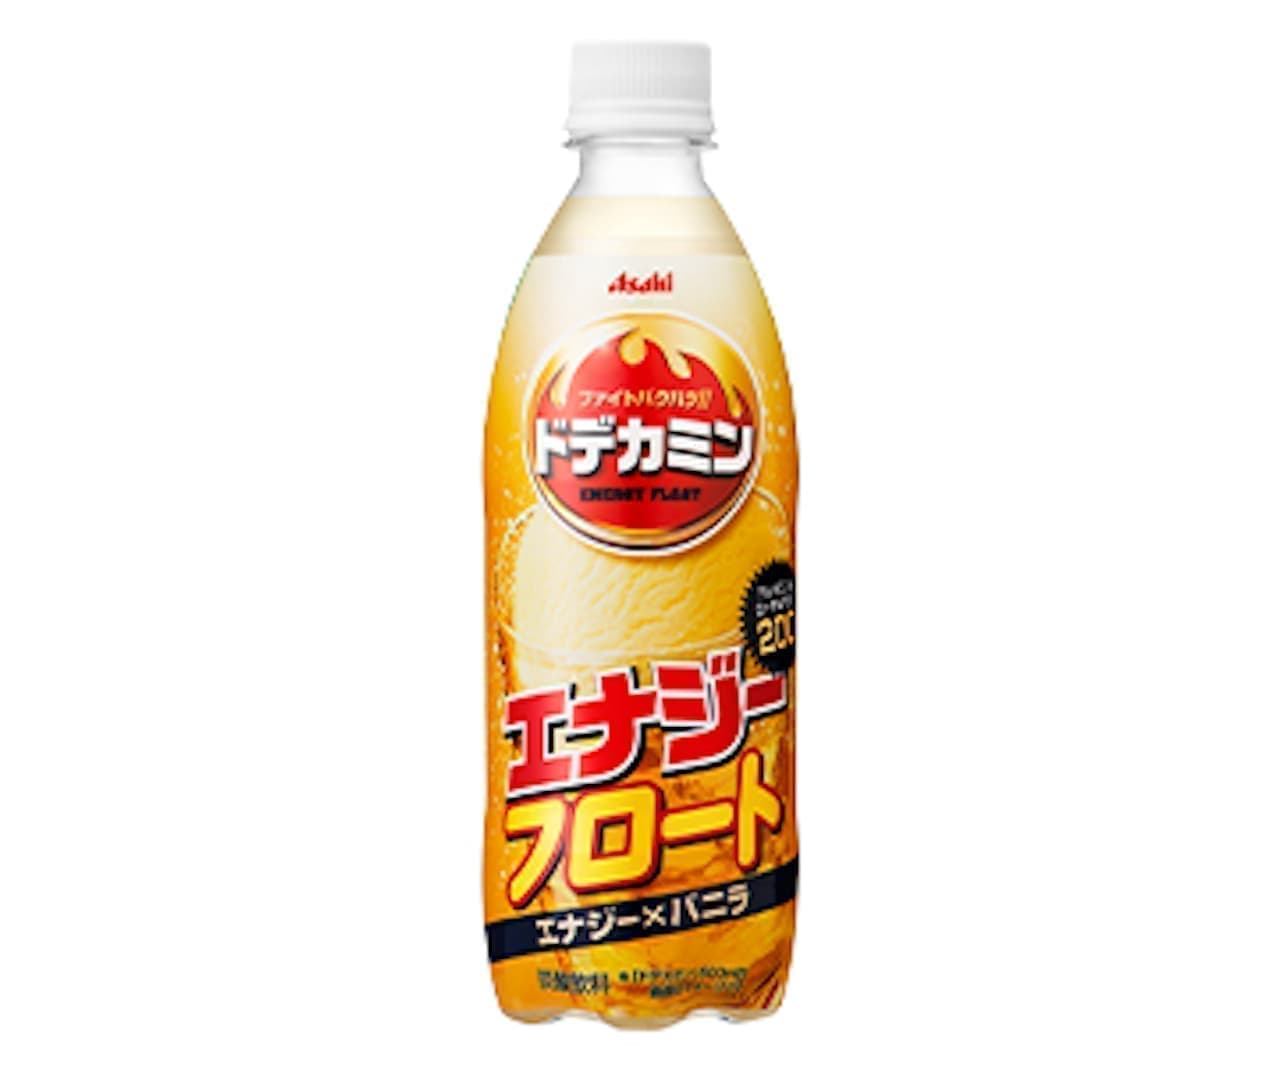 "'Dodecamin' Energy Float" from Asahi Soft Drinks